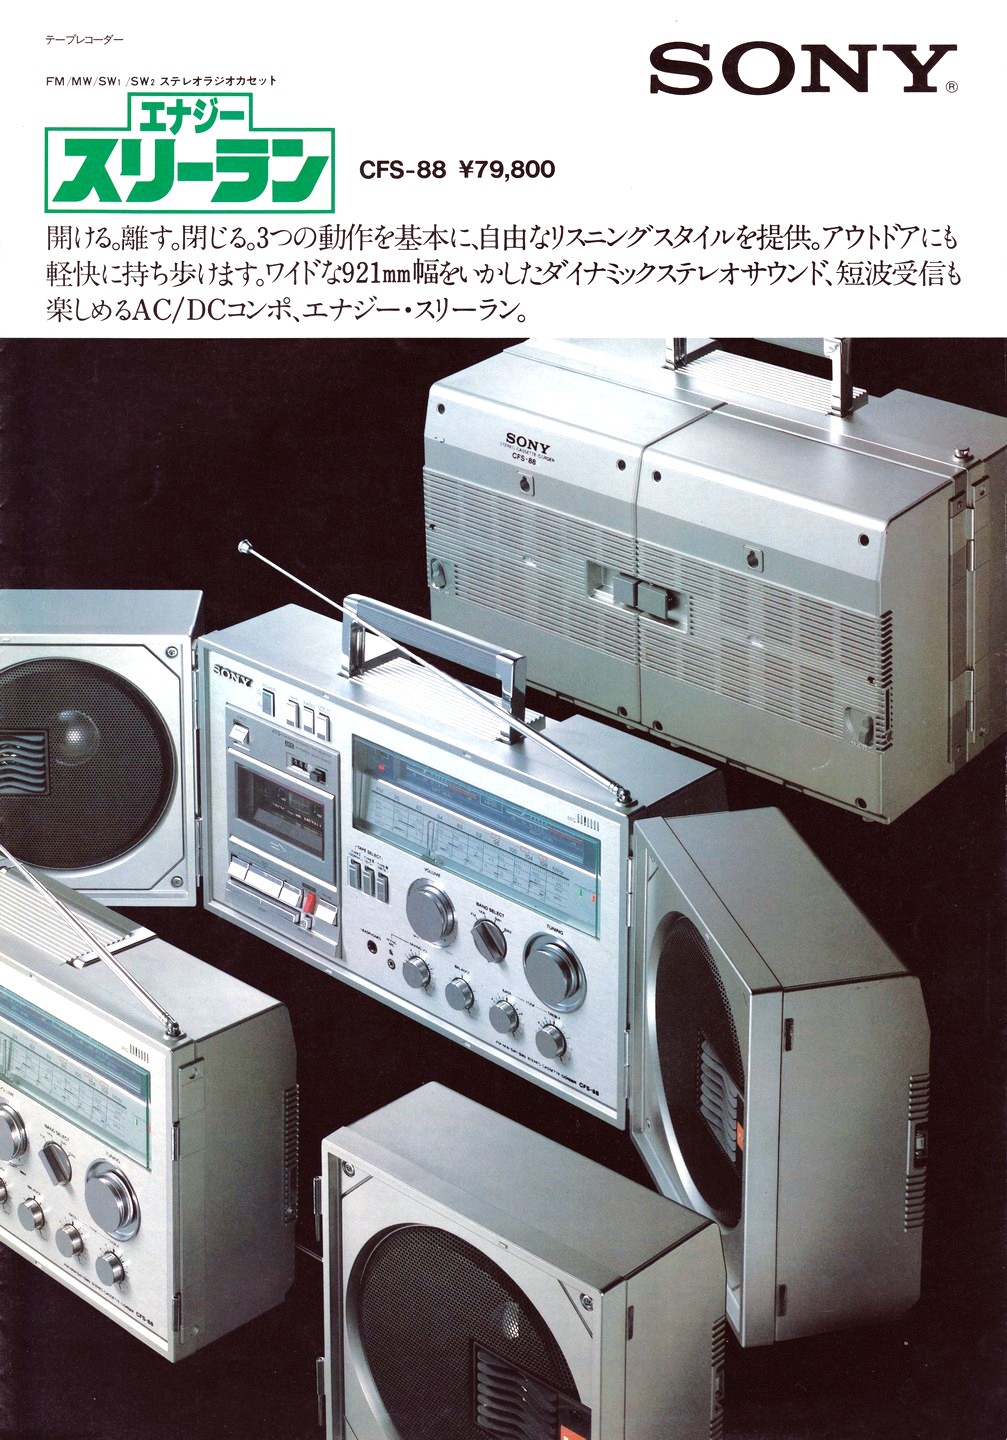 Sony CFS-88 L-Prospekt-1981.jpg